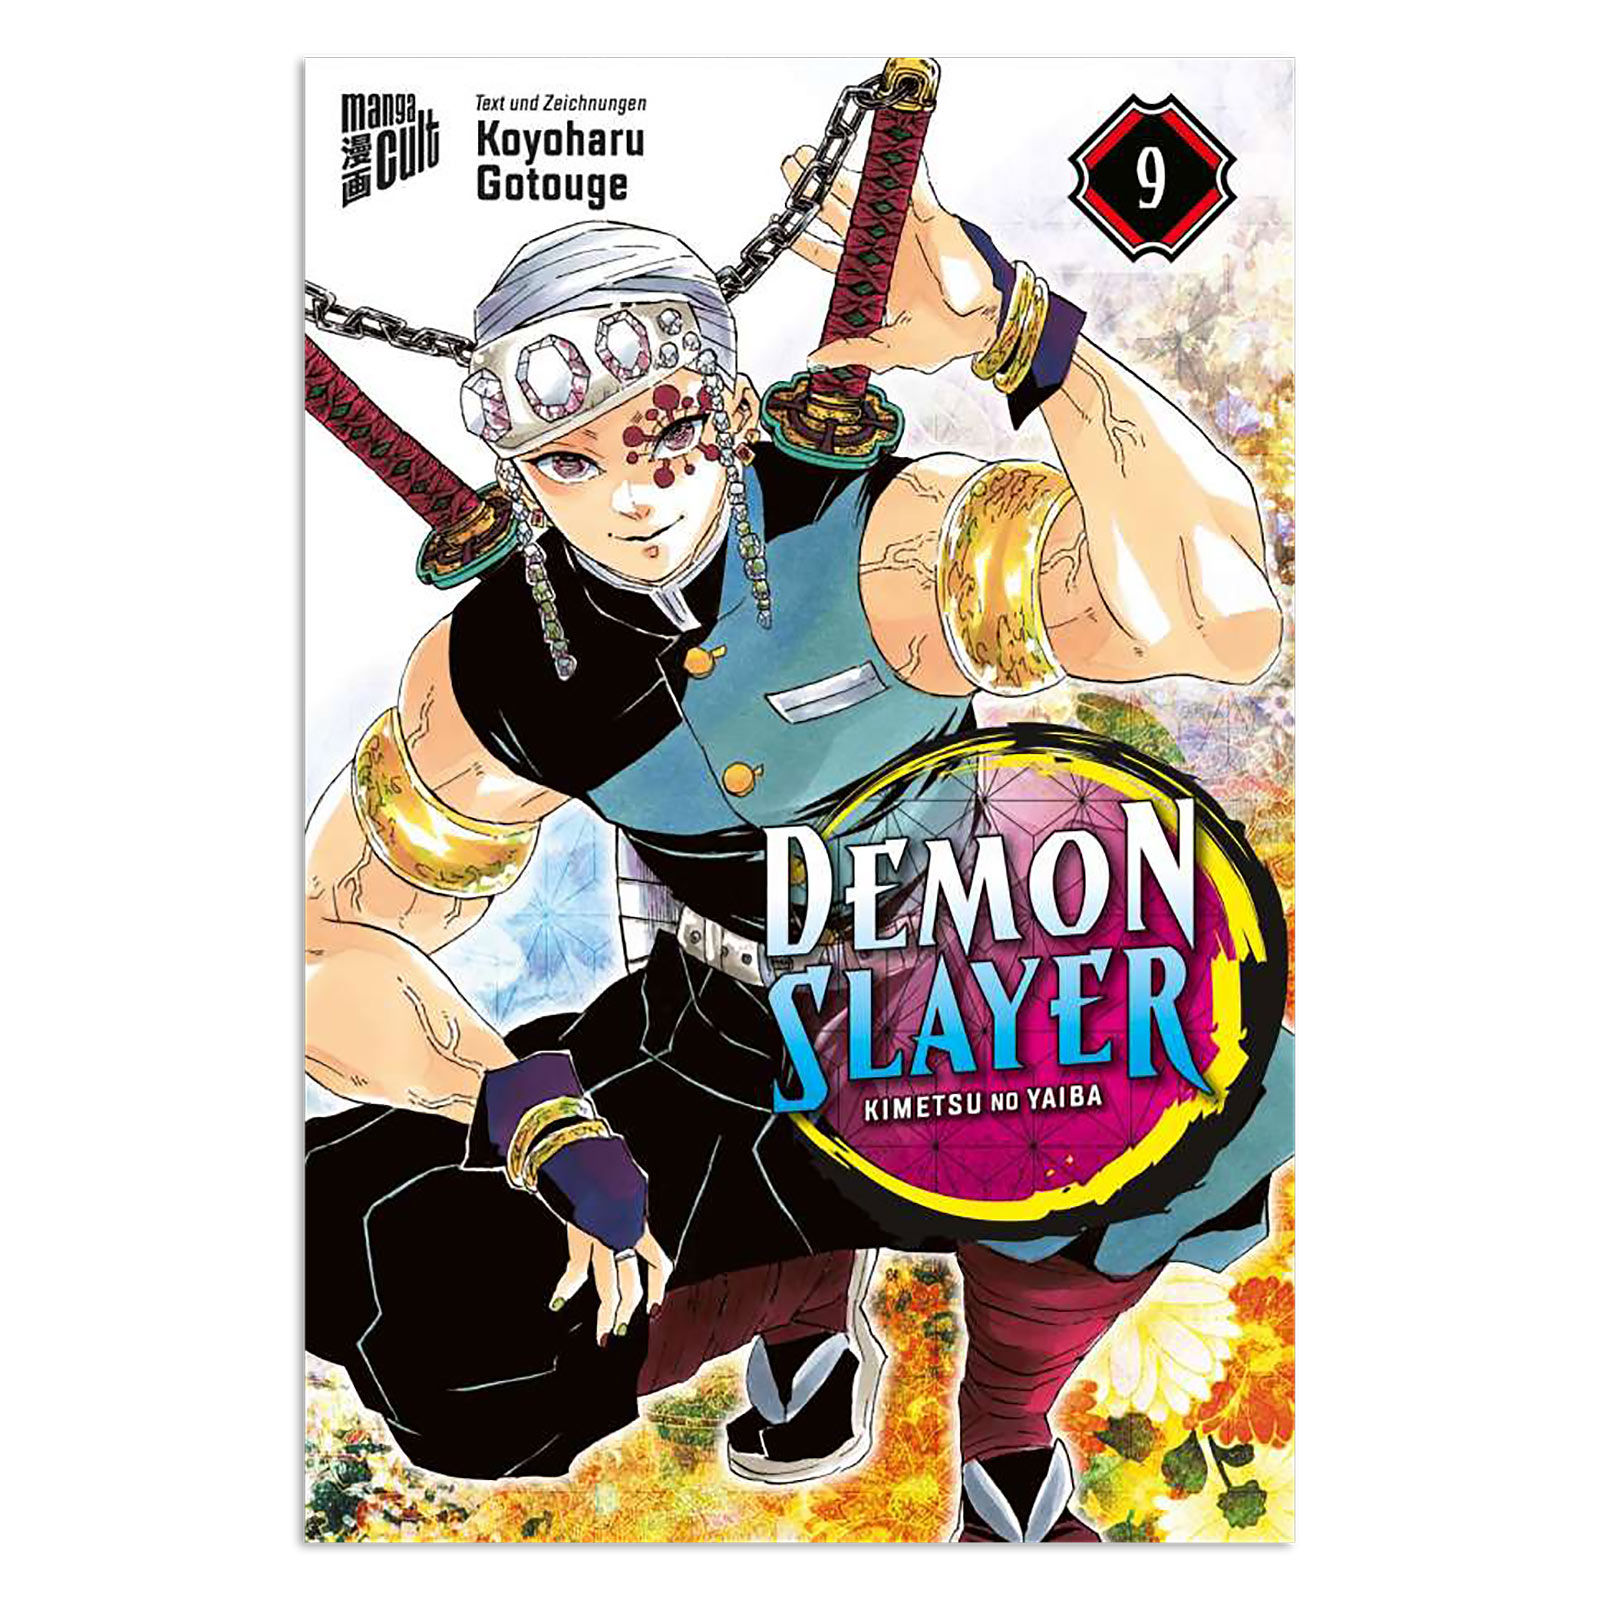 Demon Slayer - Kimetsu no yaiba Volume 9 Paperback